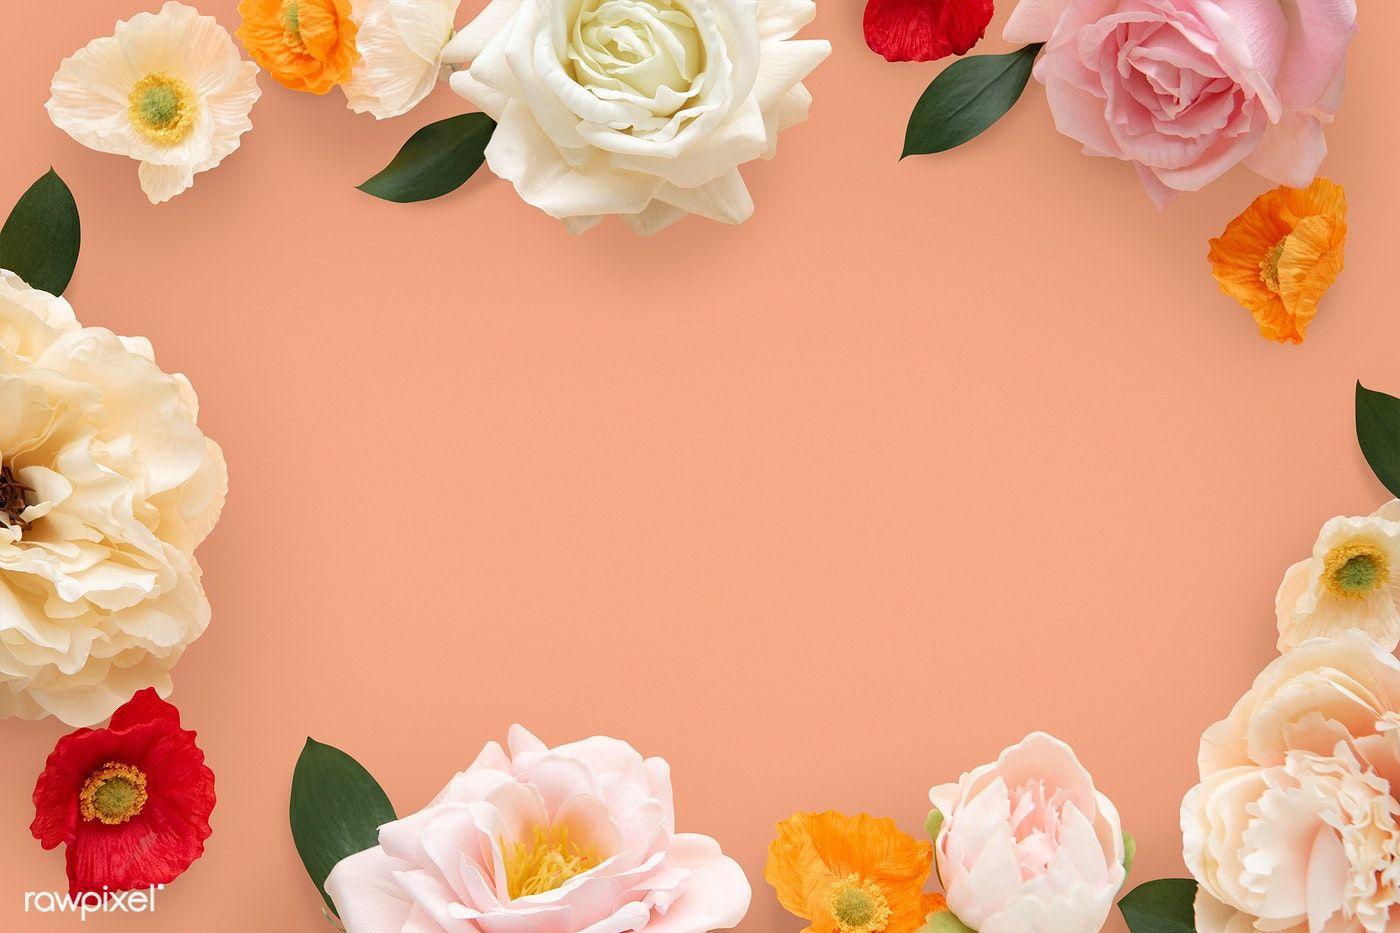 Pastel Flowers On Orange Background Premium Image By Rawpixel